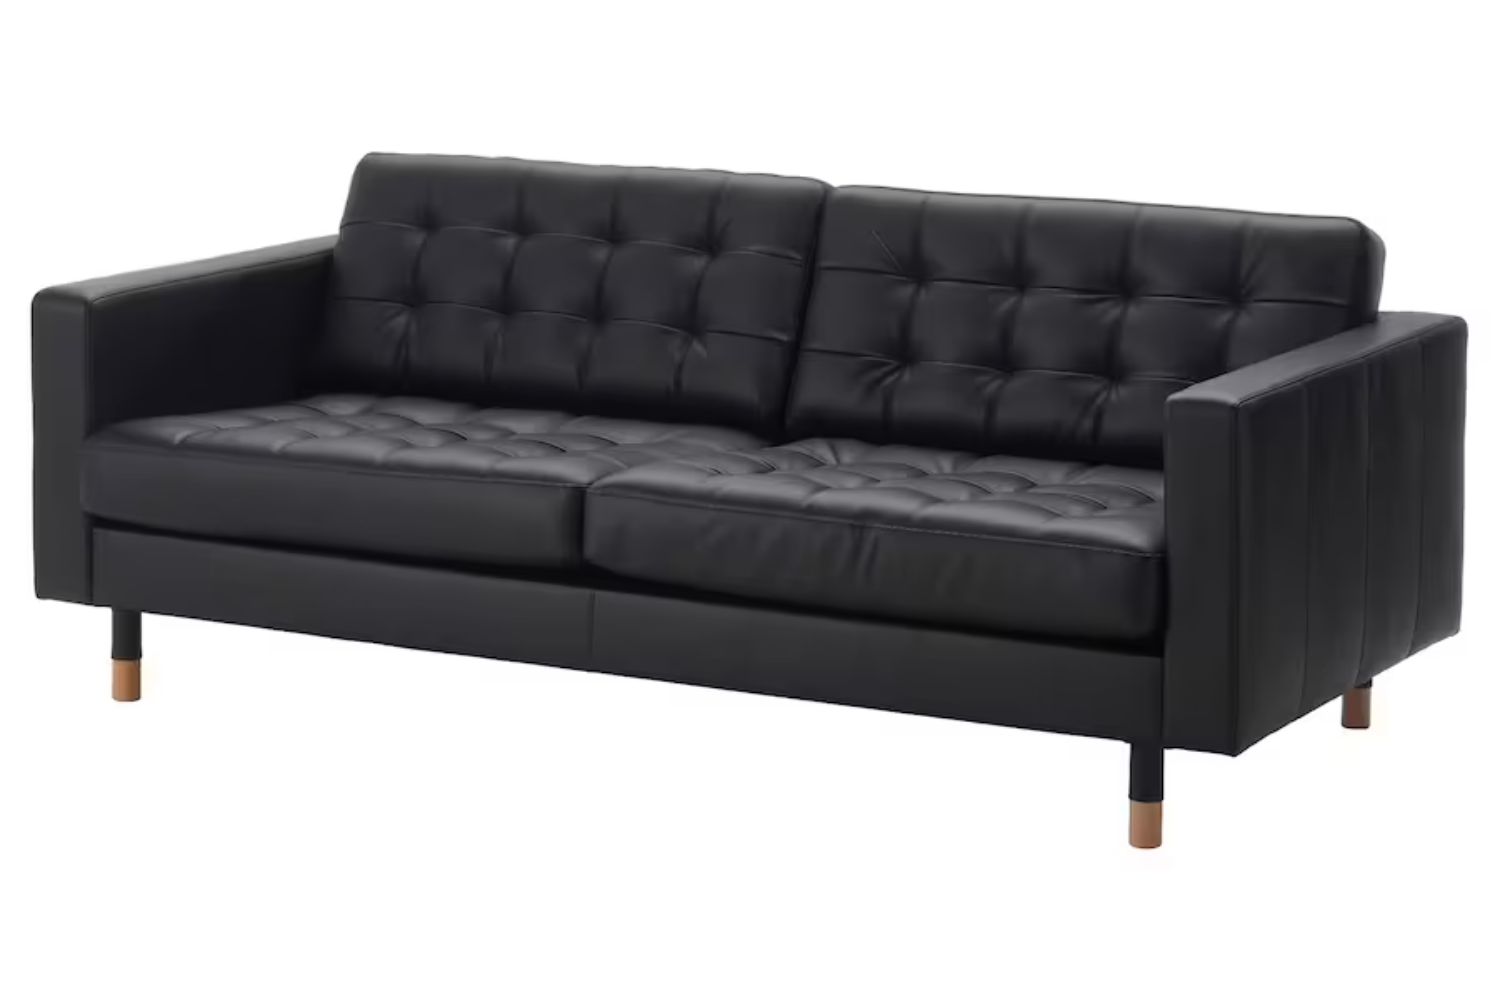 The Best Sofa Brands Option: Ikea